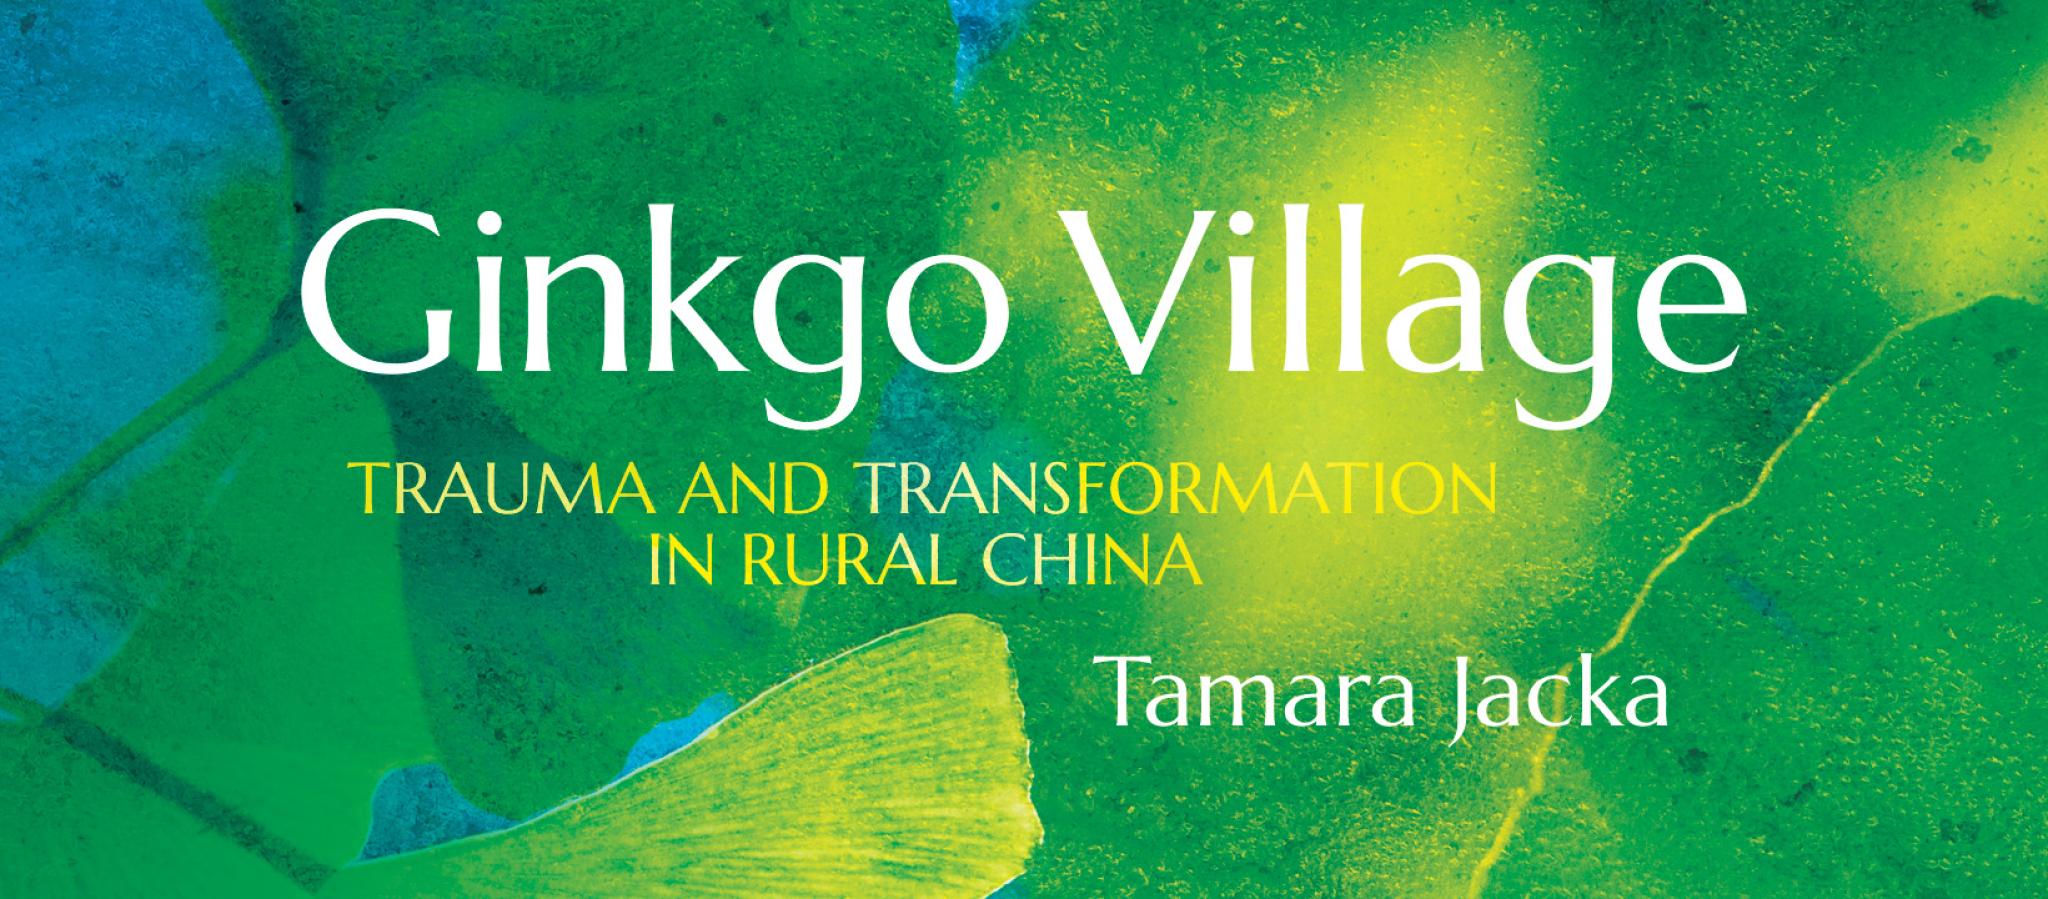 Ginkgo Village Book Cover